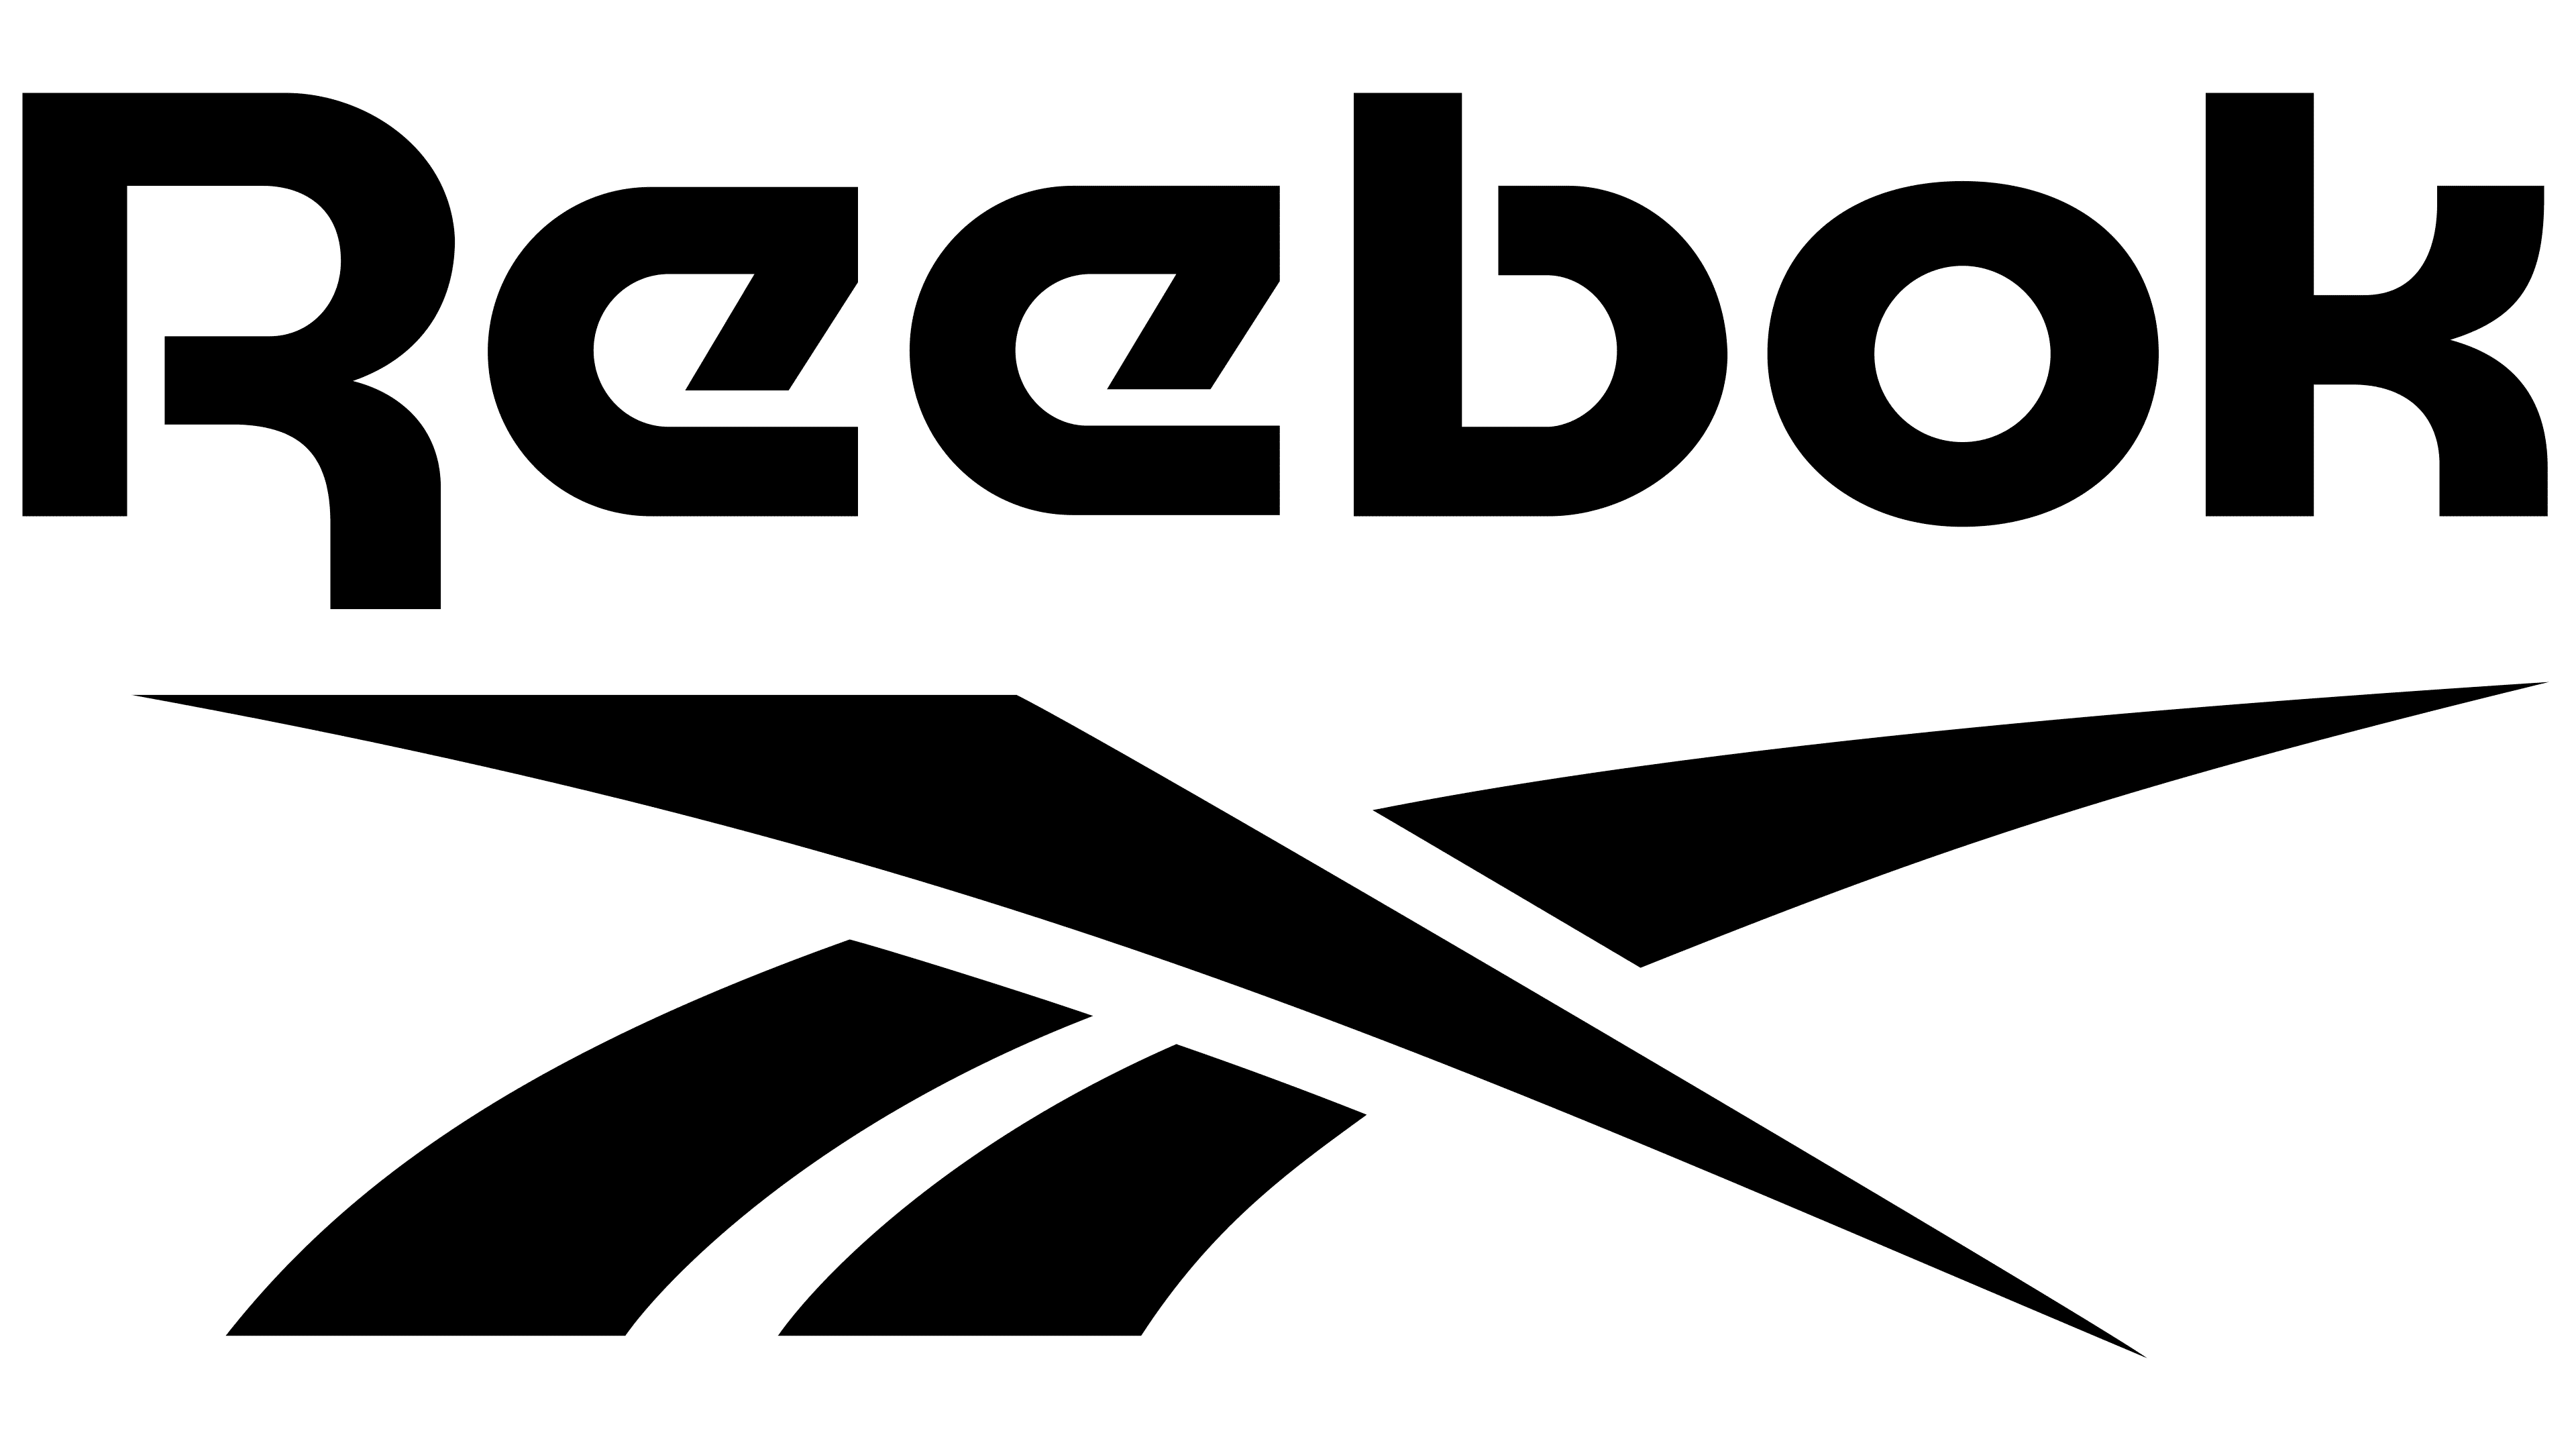 Reebok-logo-1